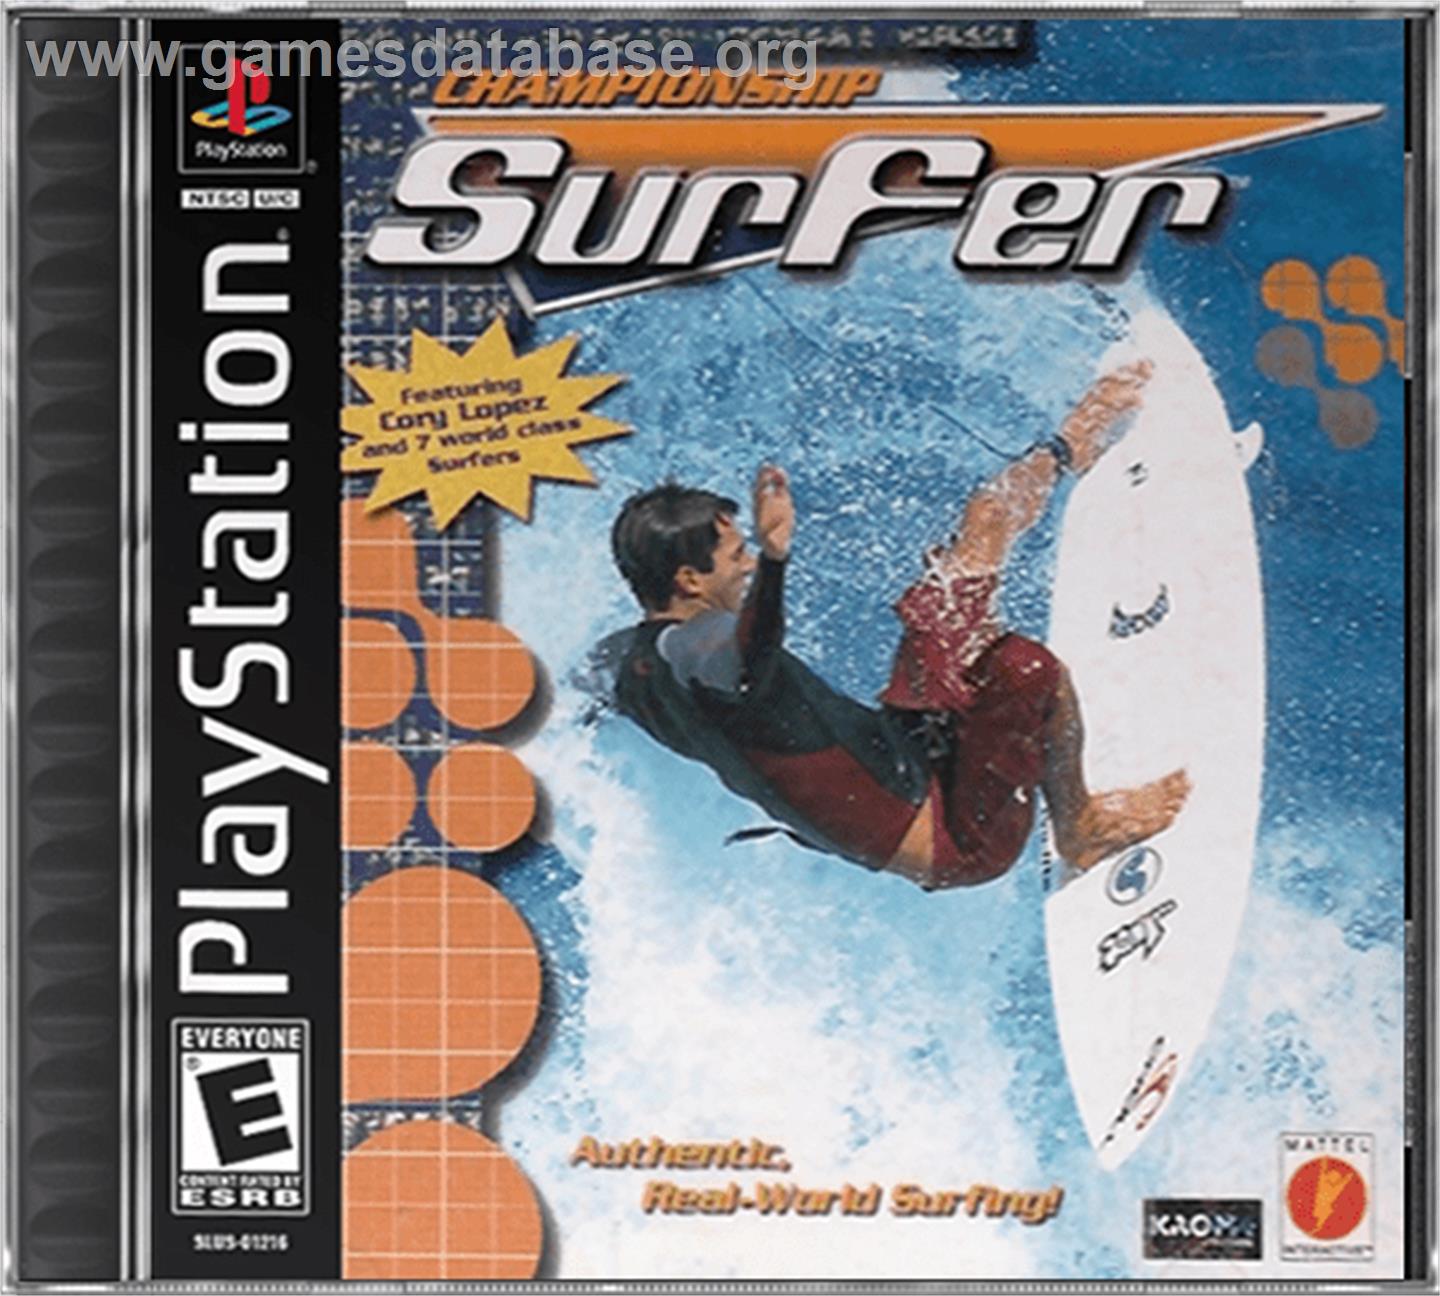 Championship Surfer - Sony Playstation - Artwork - Box